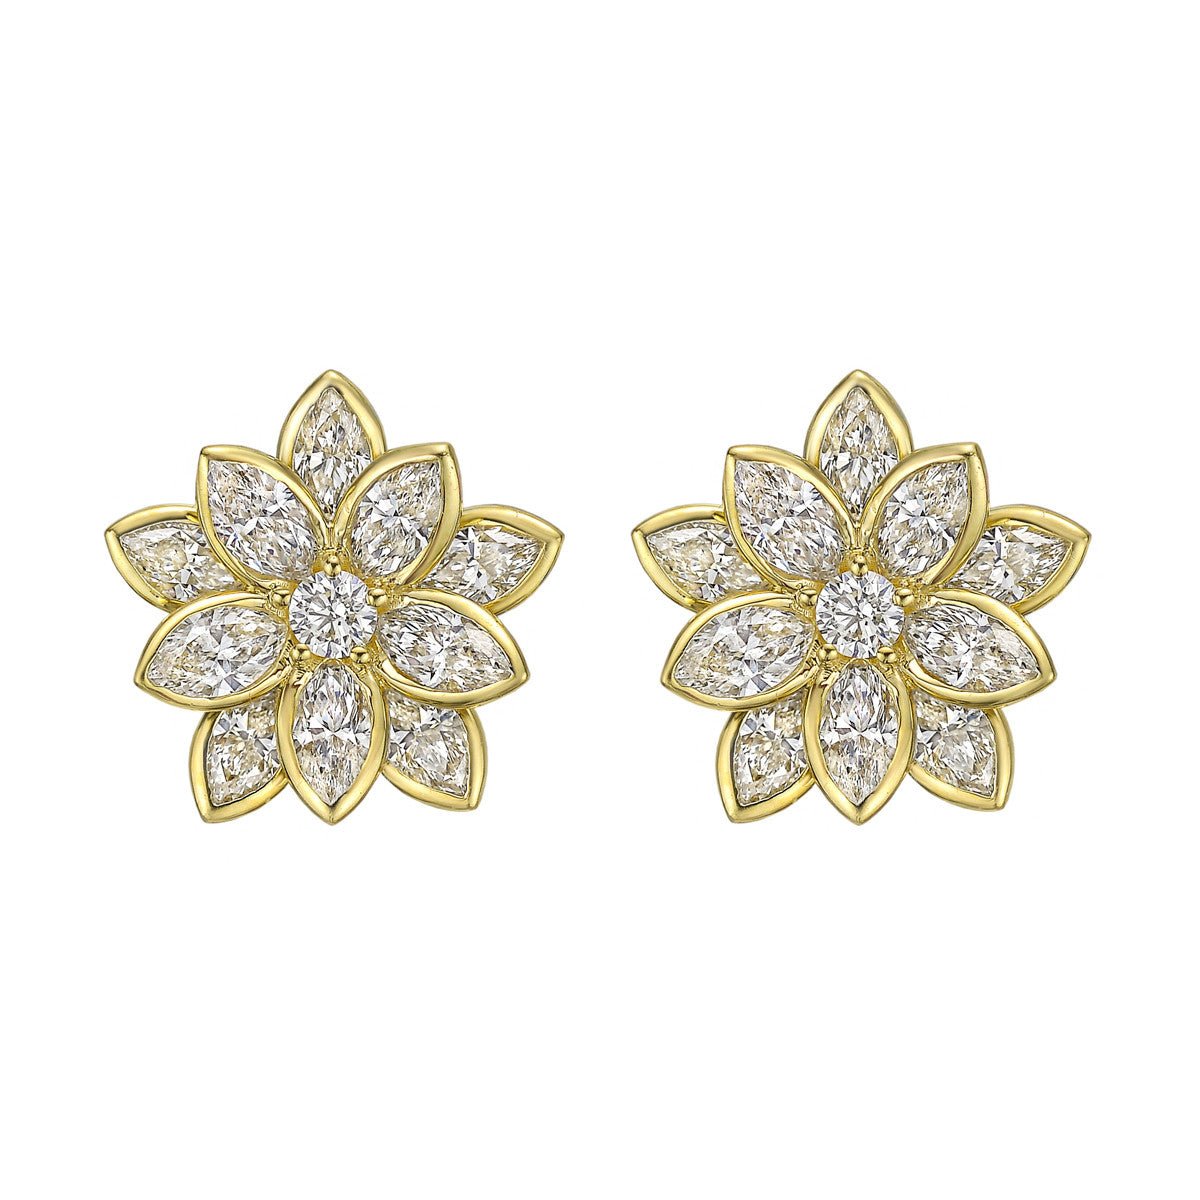 Greenleaf & Crosby - 18k Yellow Gold Diamond Lotus Earrings